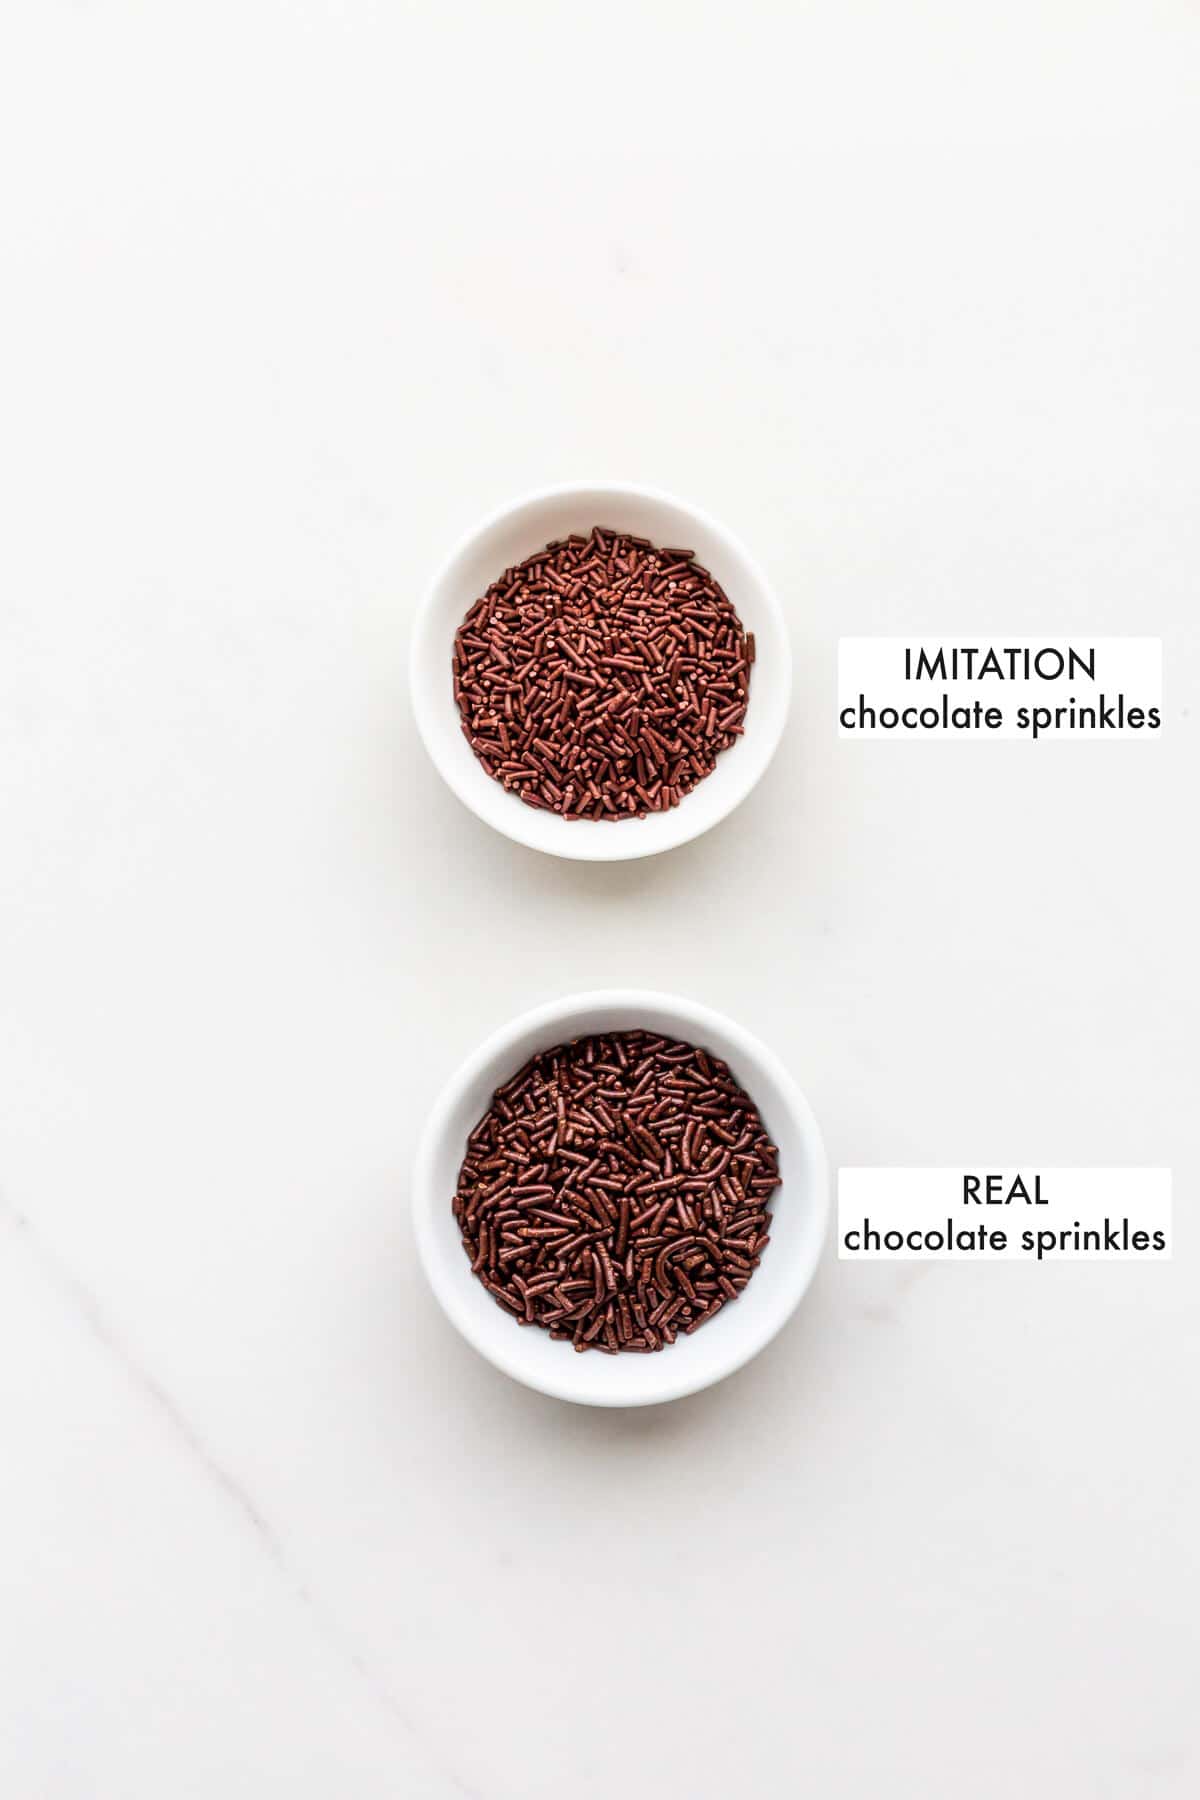 Imitation chocolate sprinkles versus real chocolate sprinkles which are darker.